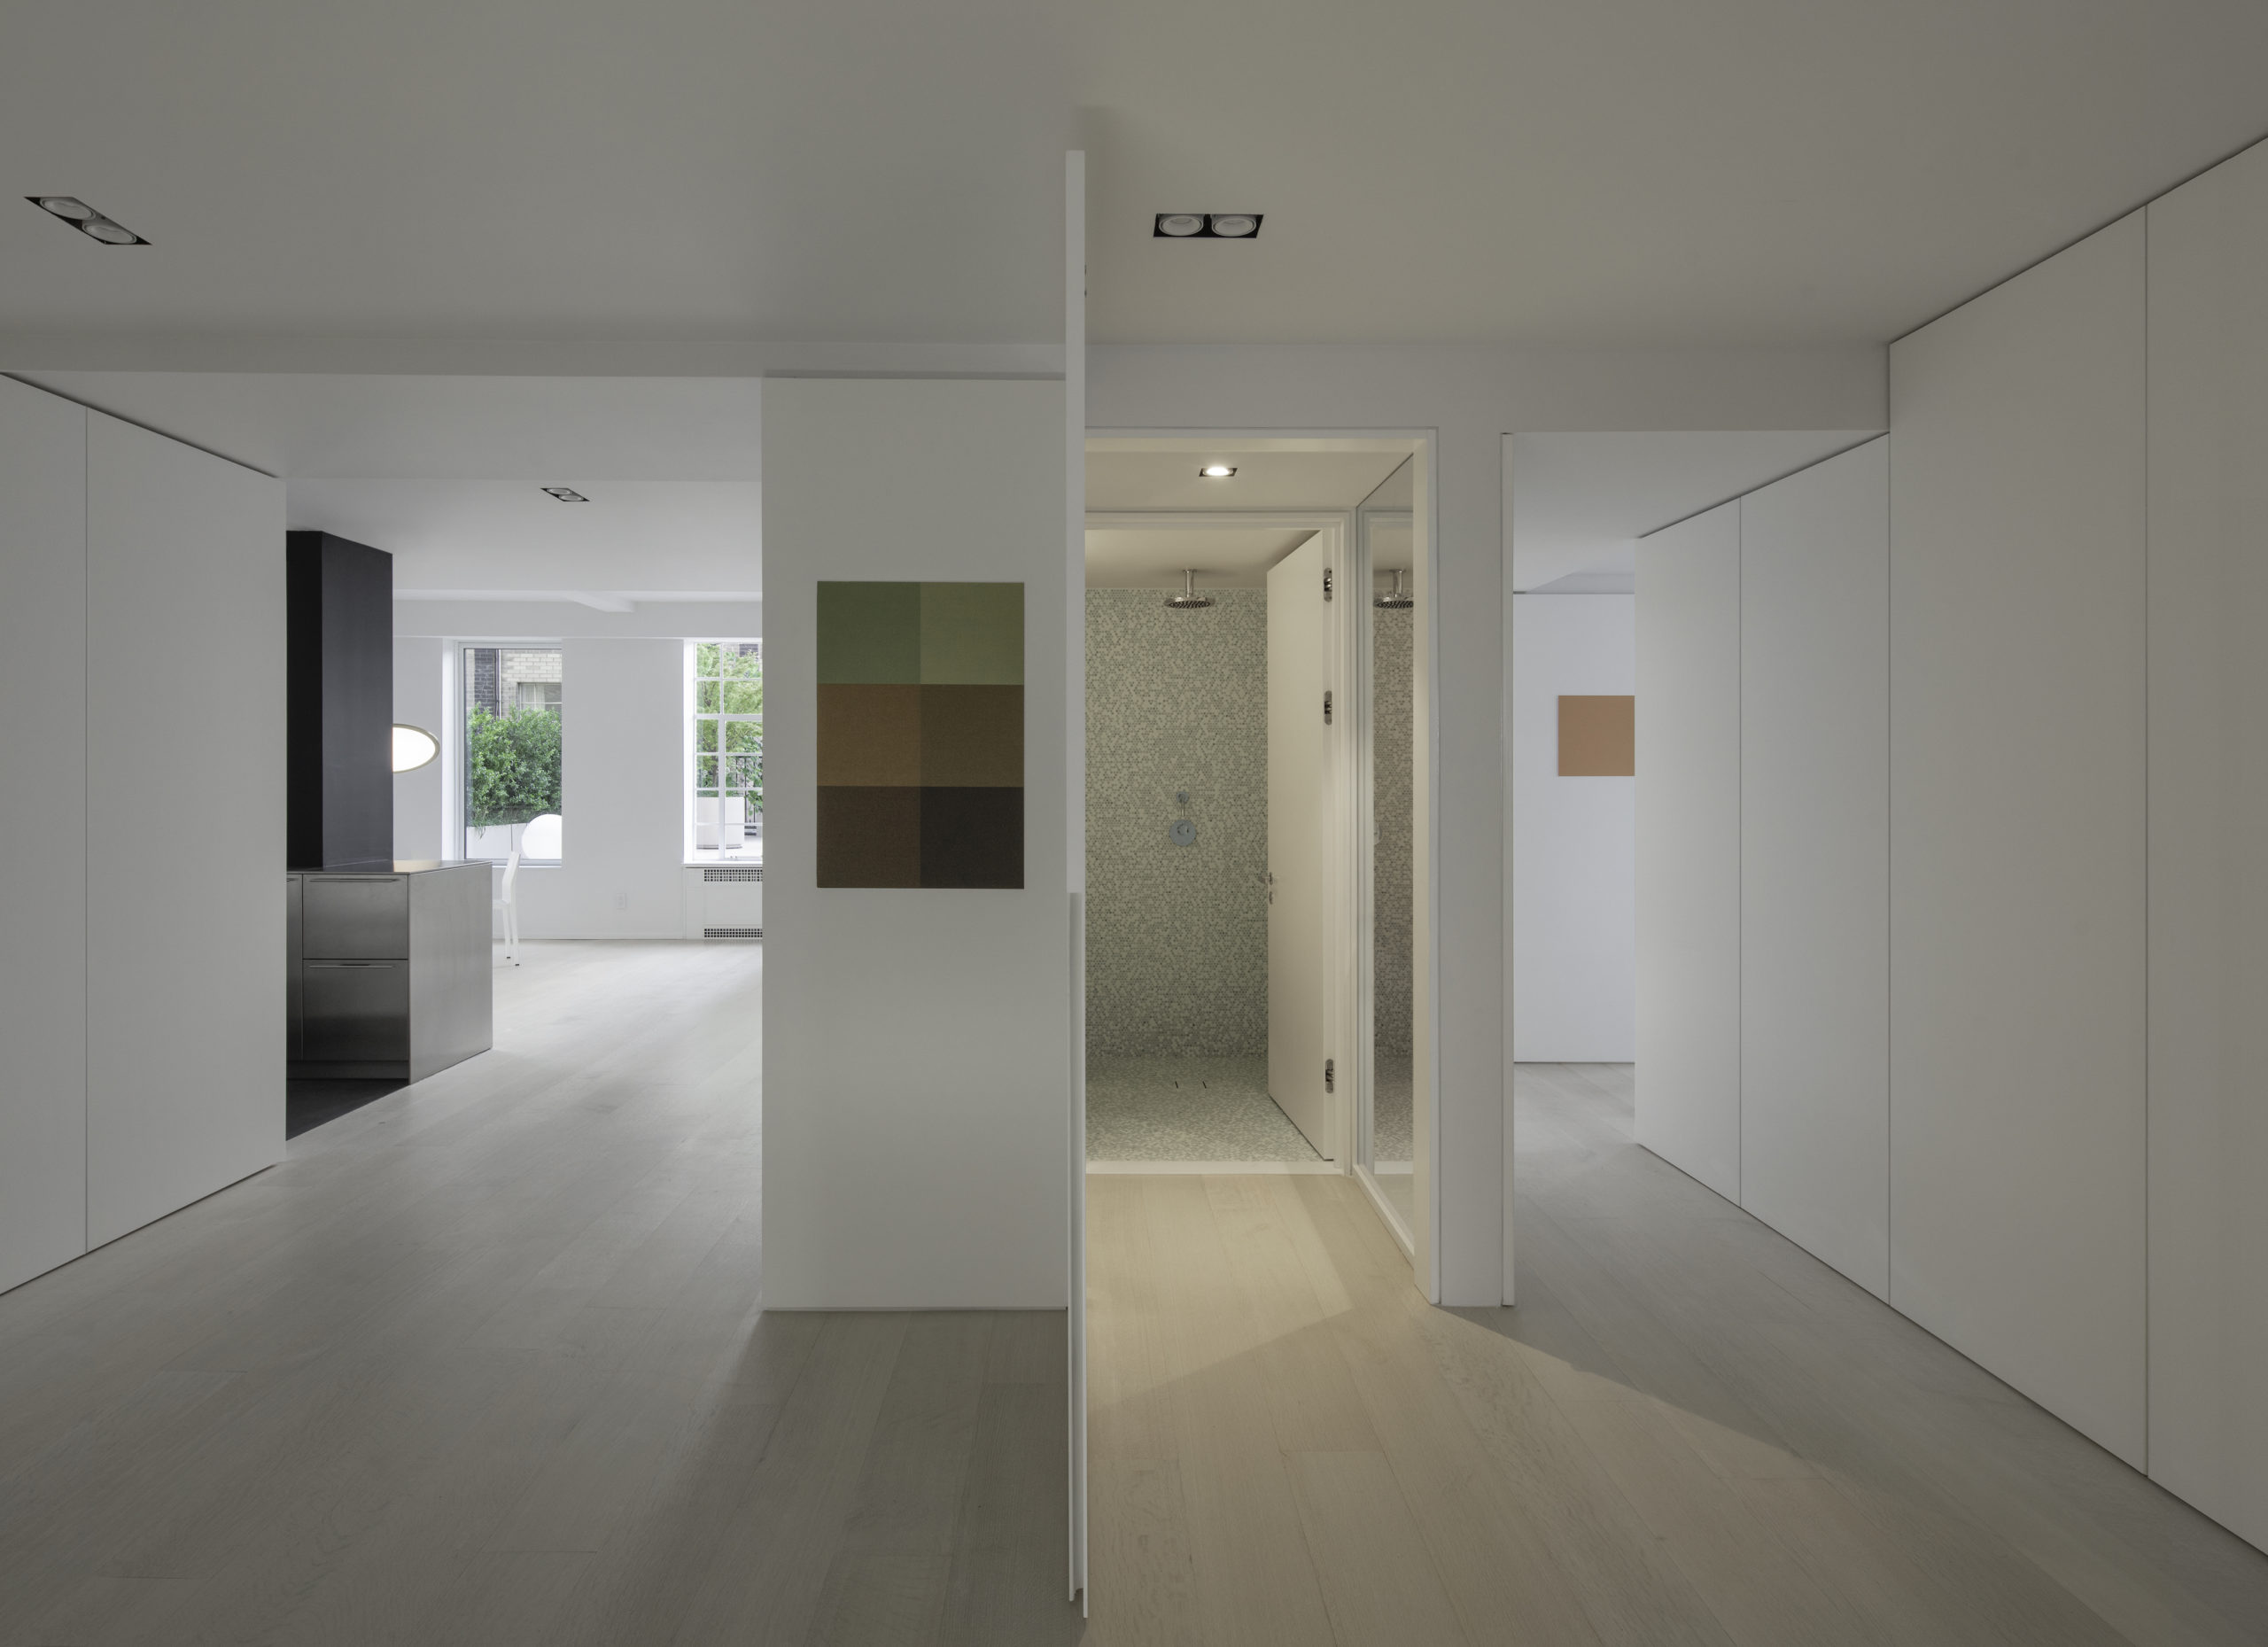 Architect Georg Windeck Transforms A, Dan’s Hardwood Flooring